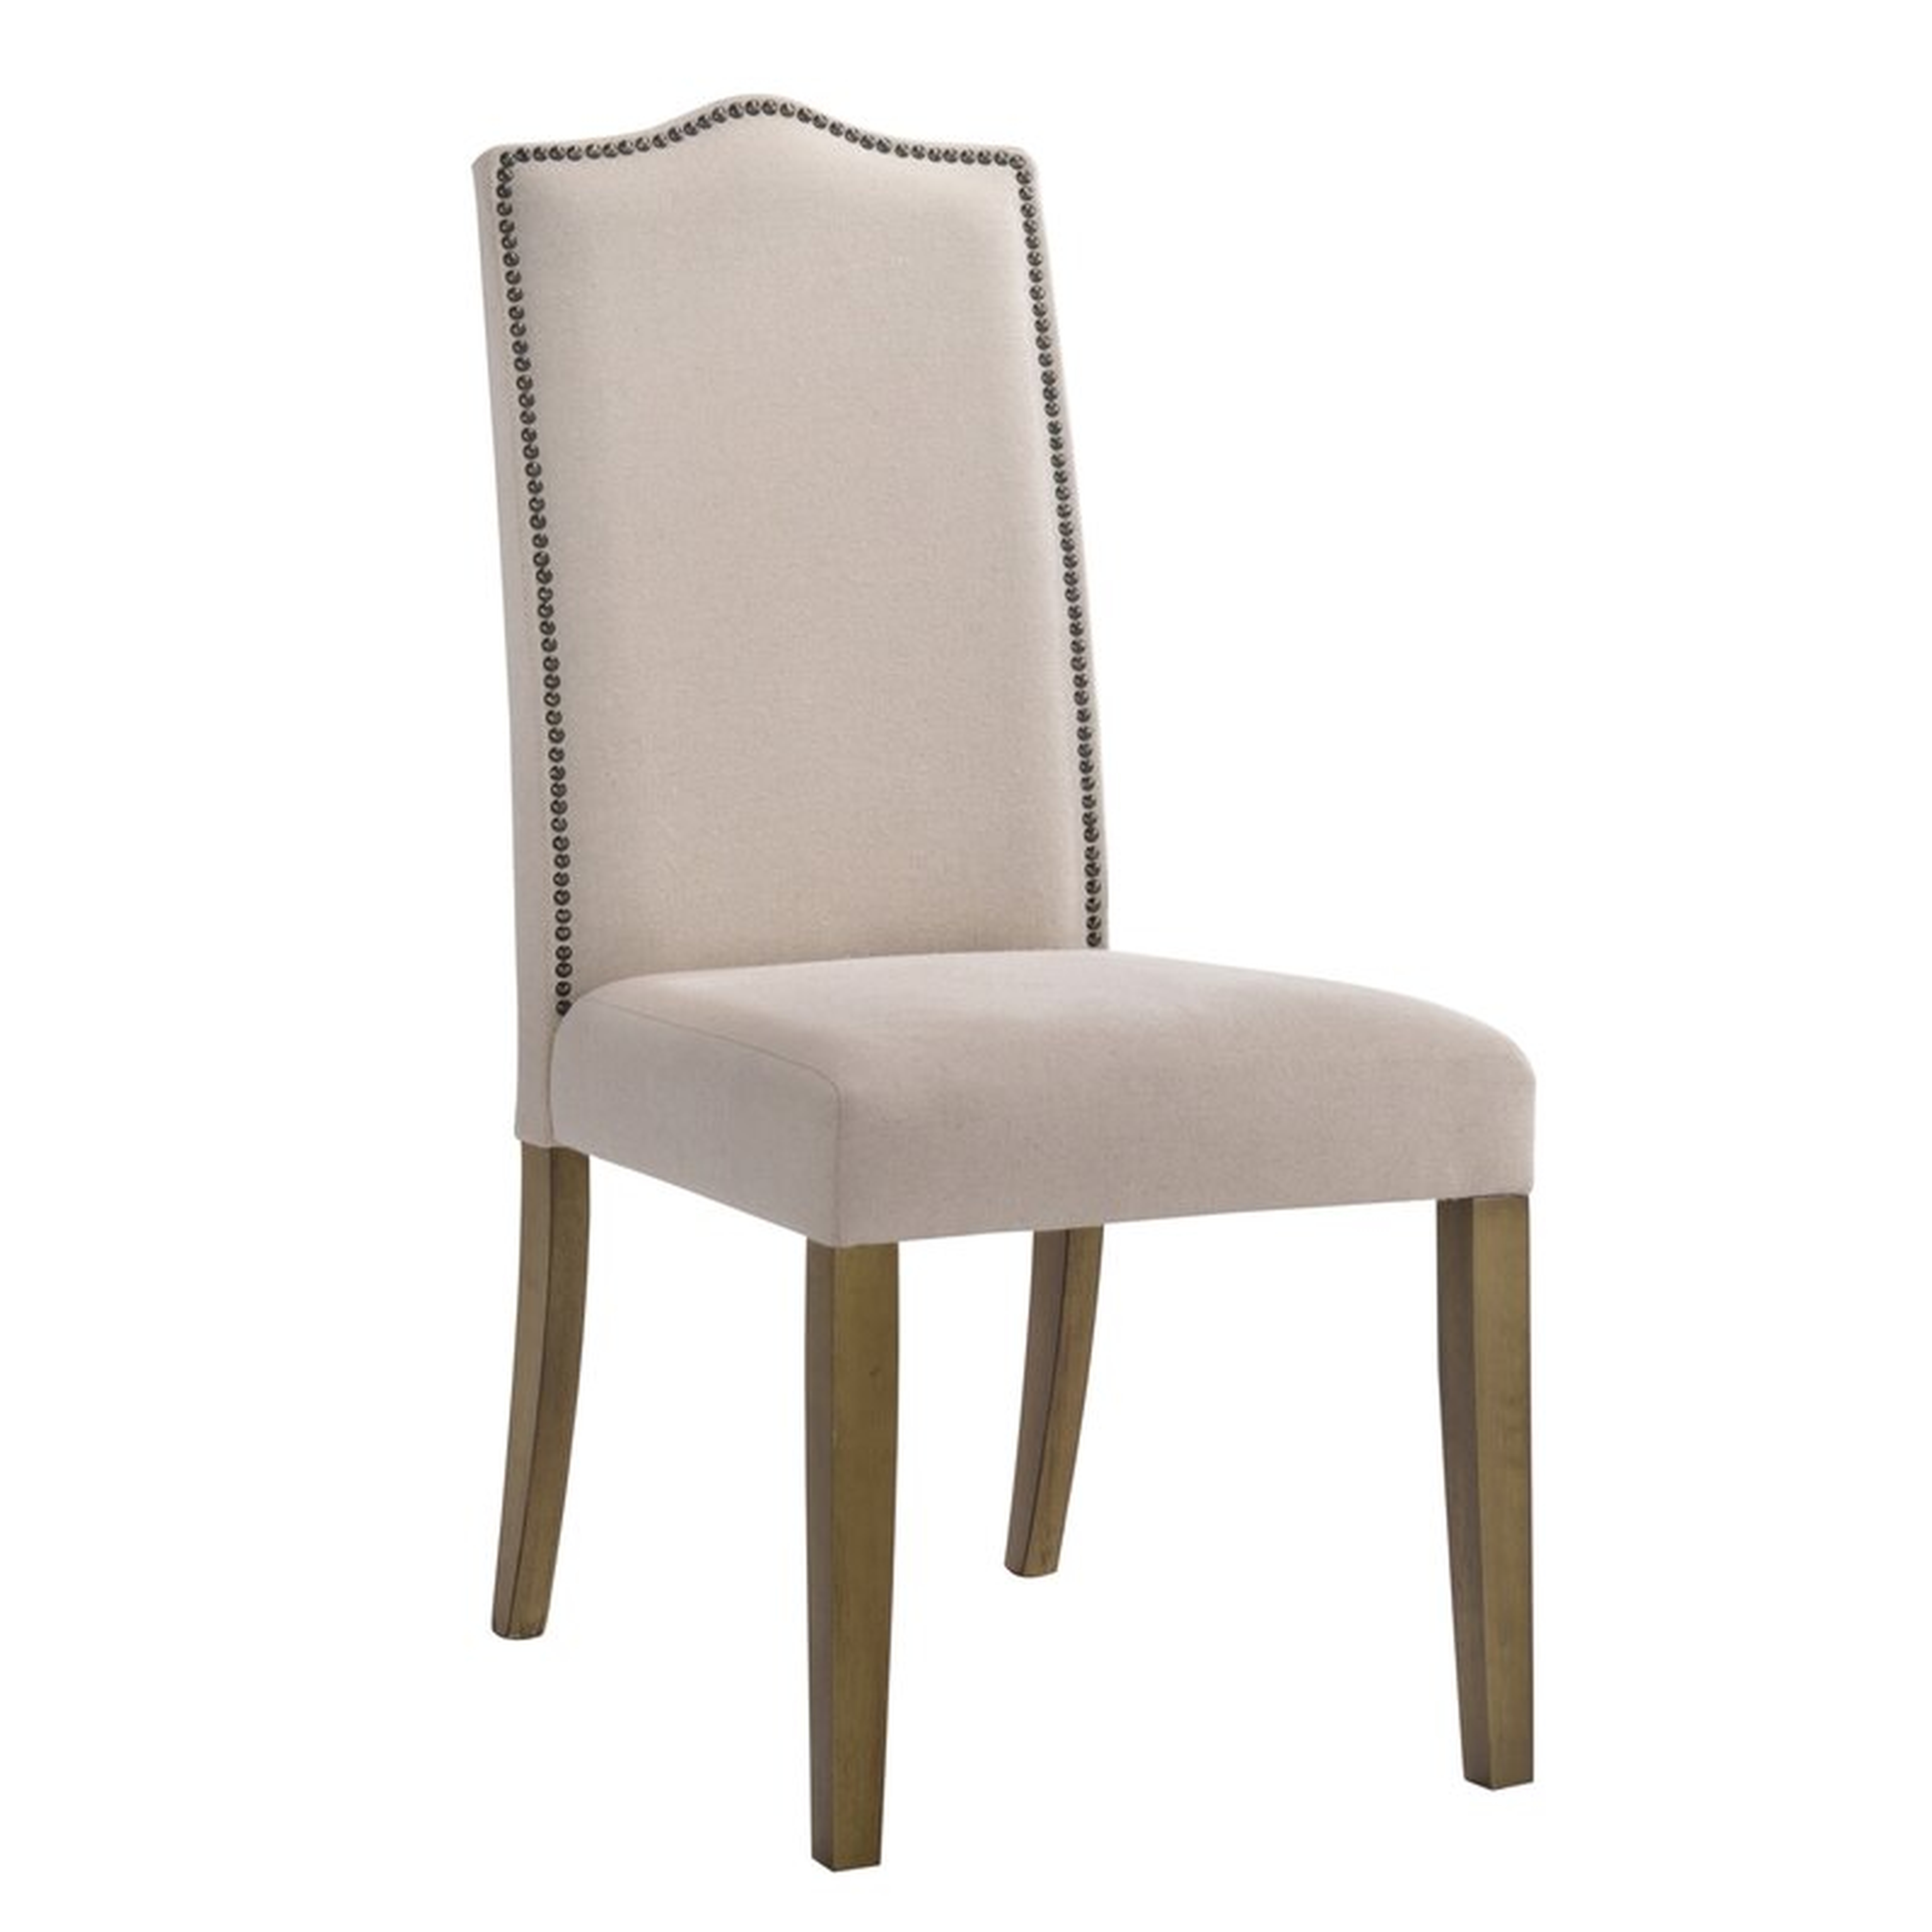 Maelynn Upholstered Dining Chair - Wayfair